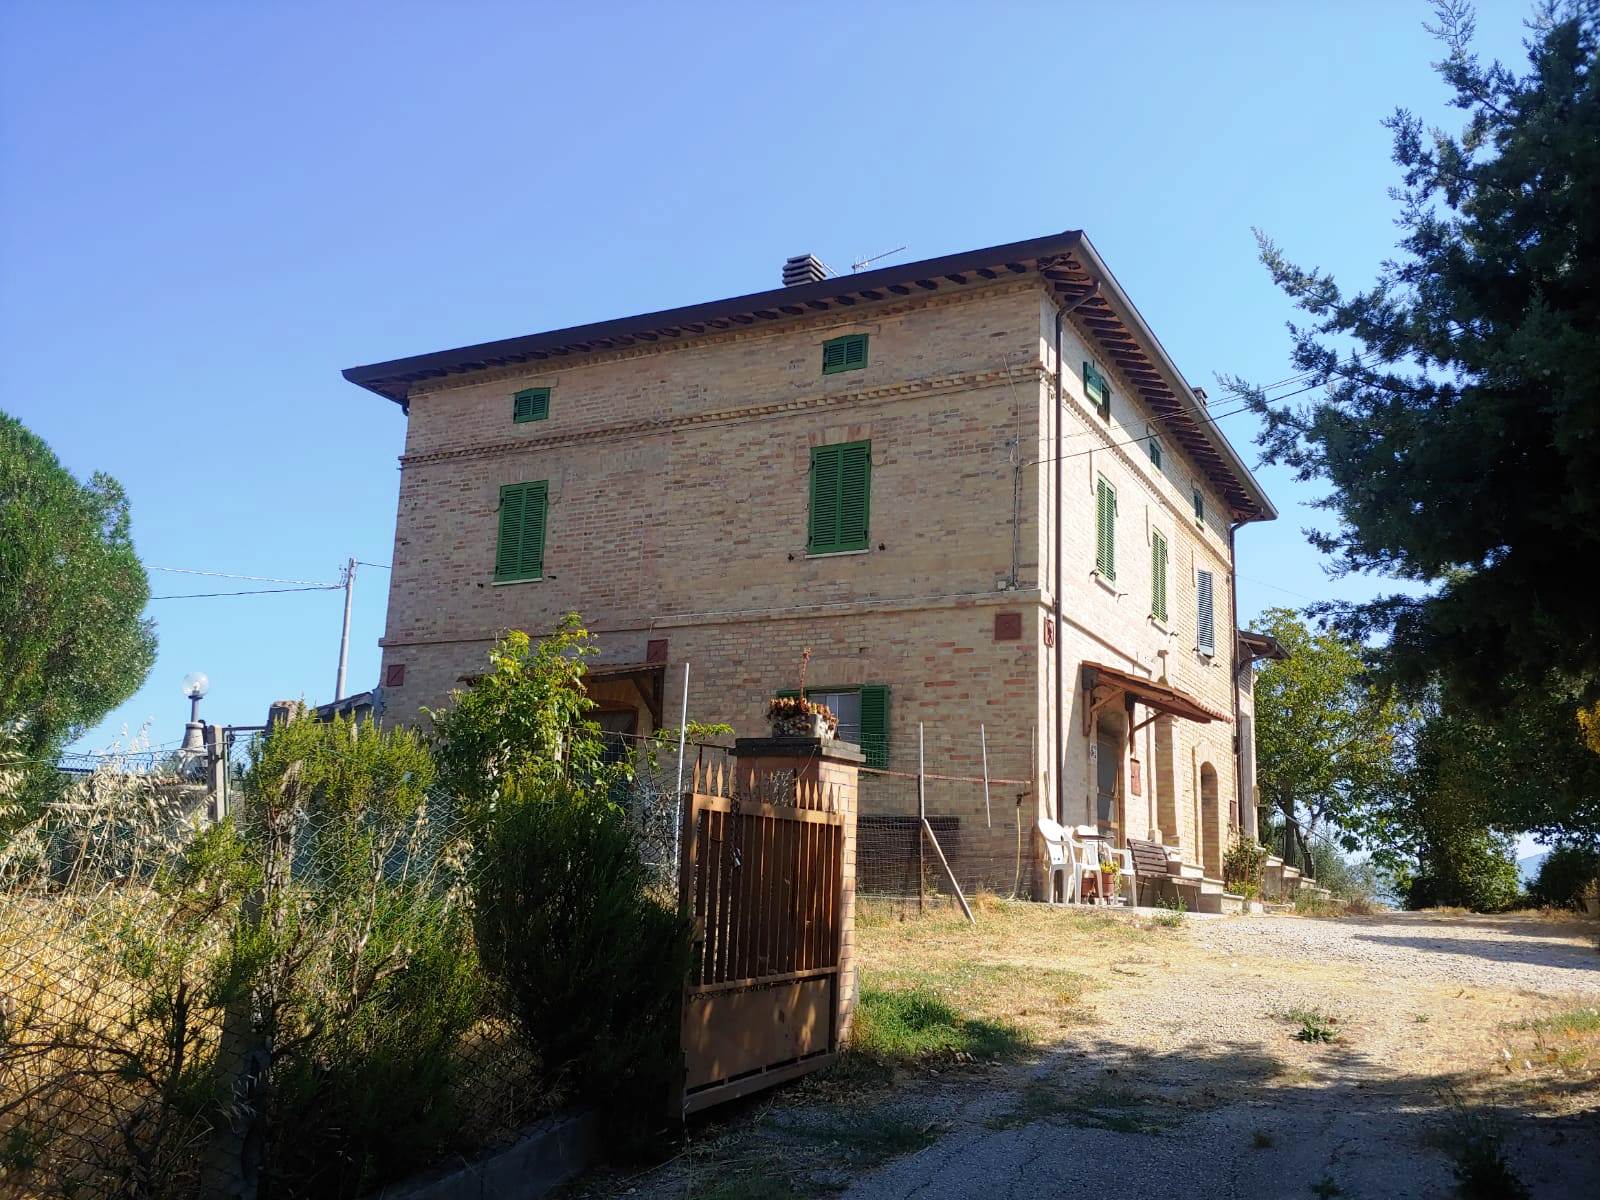 For sale cottage in quiet zone Montefalco Umbria